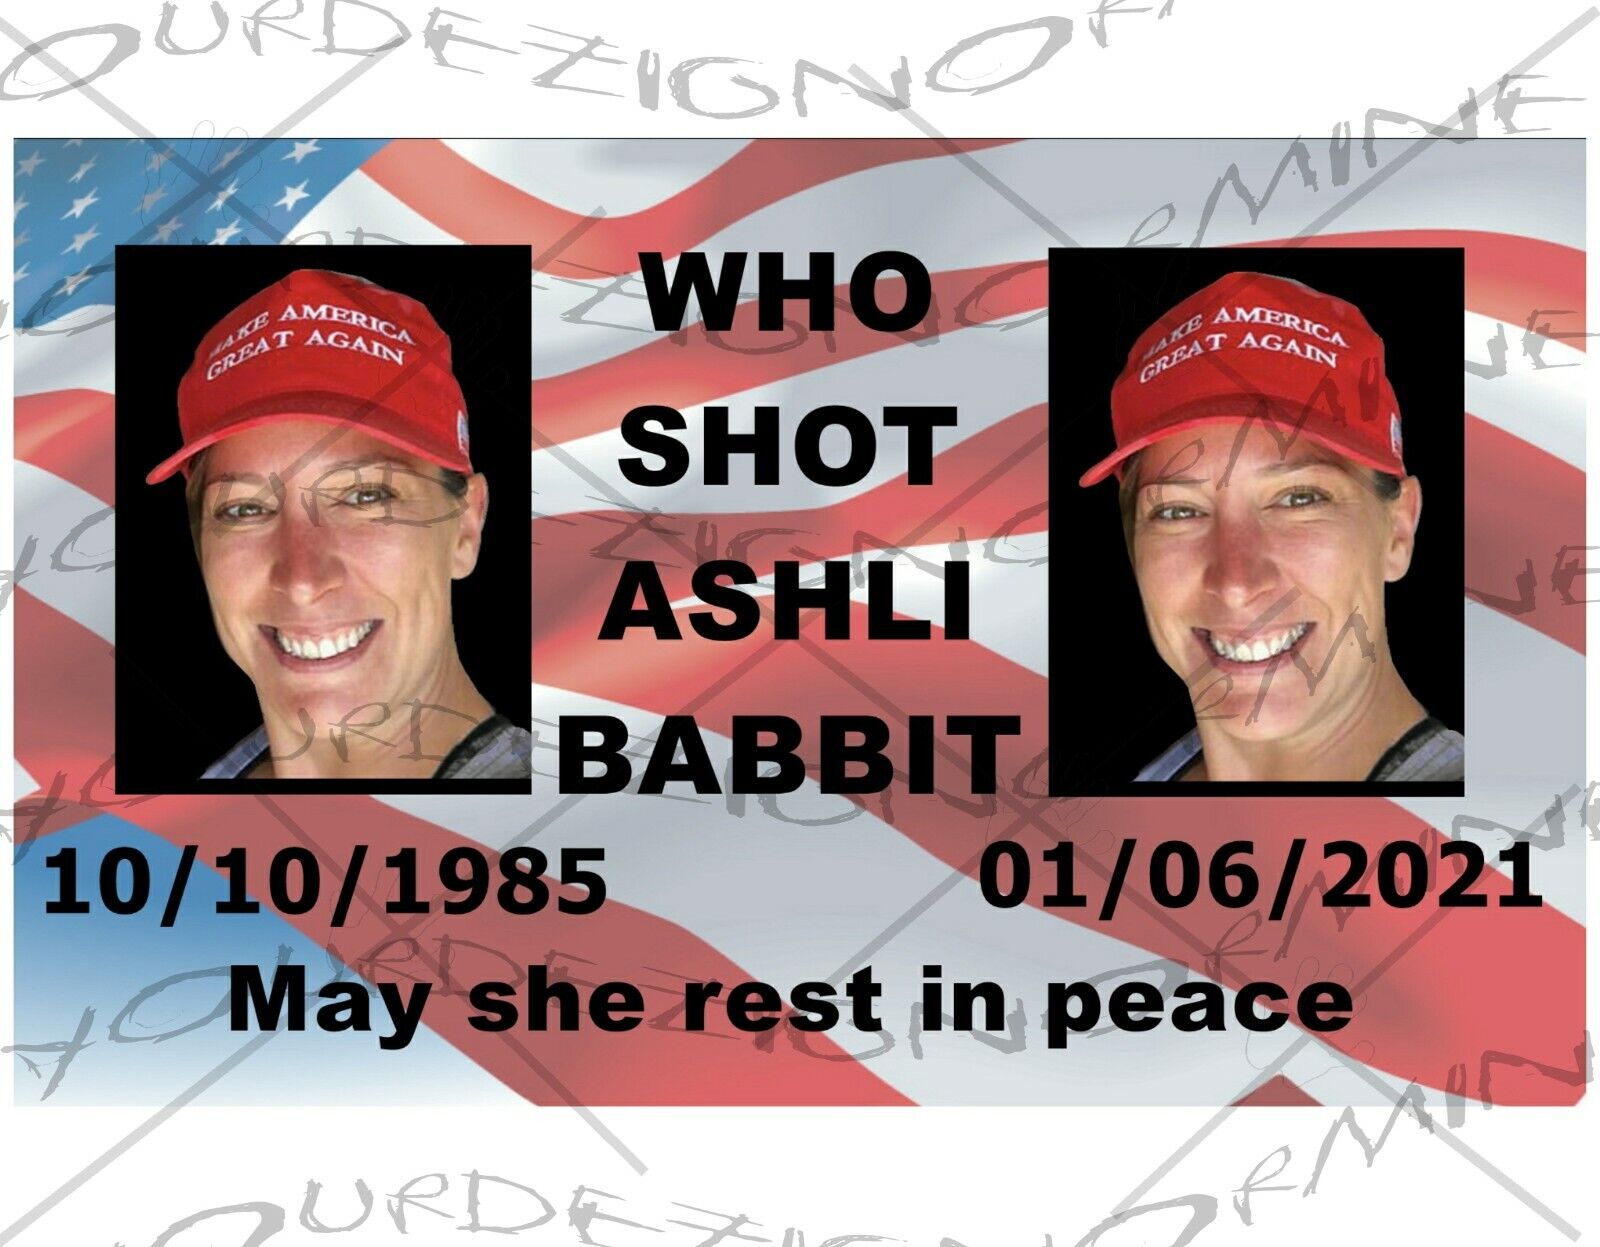 WHO SHOT ASHLI BABBIT 1/6/21 US CAPITOL BLDG BUMPER STICKER Trump wants to know